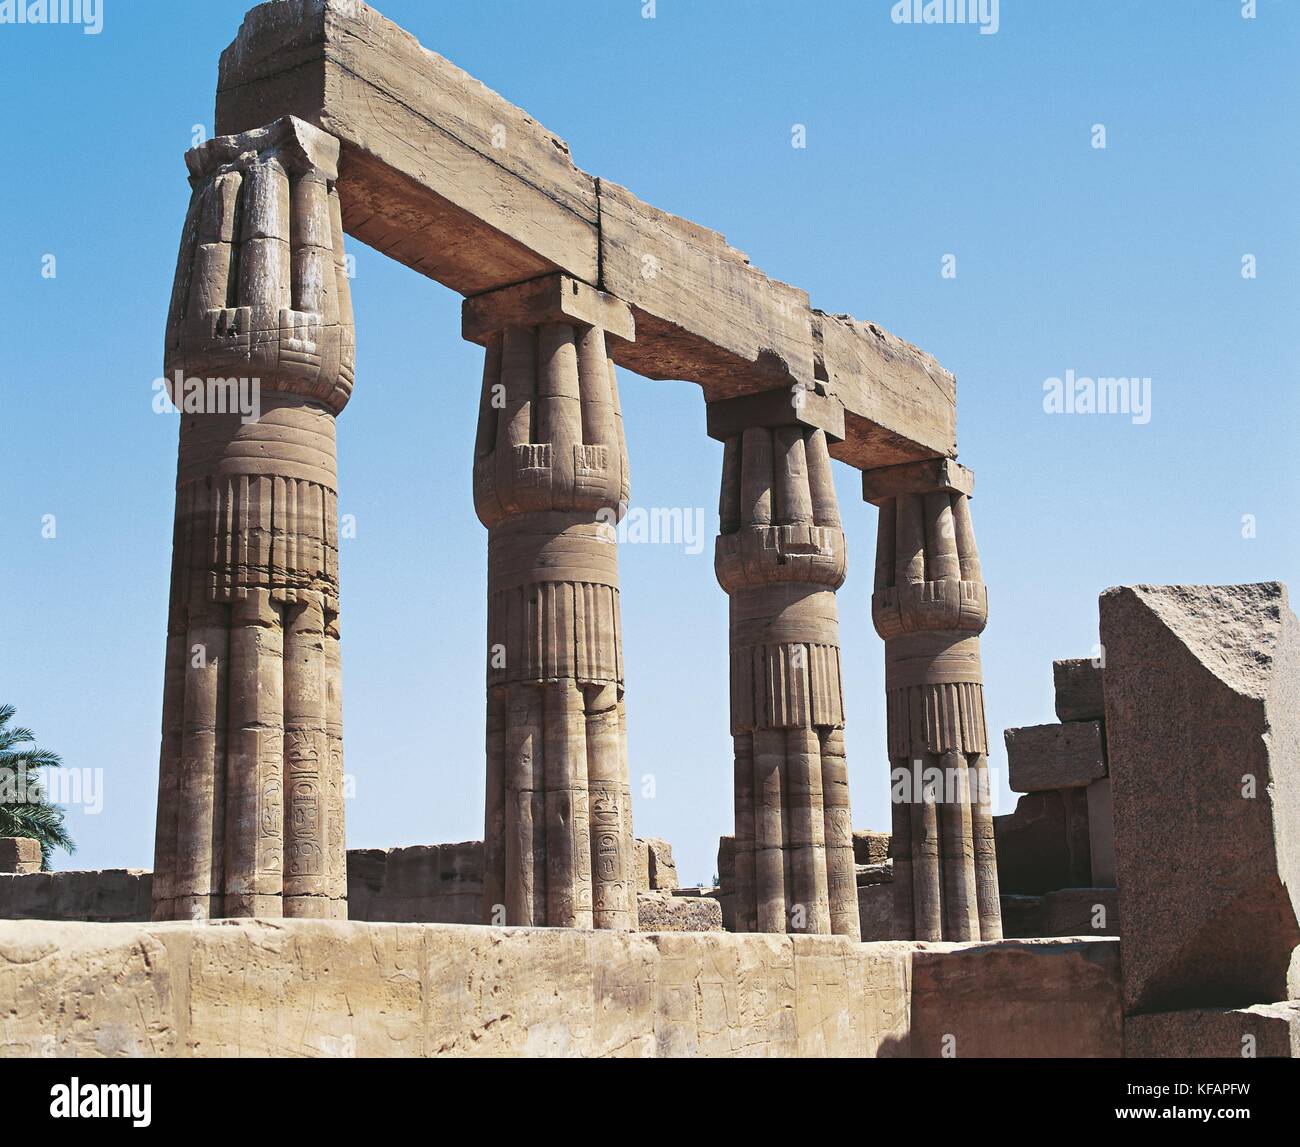 Egipto, antigua Tebas (lista de patrimonio mundial de la UNESCO, 1979). Luxor Karnak. gran templo de Amón. Jardín botánico hall. columnas en forma de papiro. el reinado de Thutmosis III, 1490-1436 A.C. Foto de stock